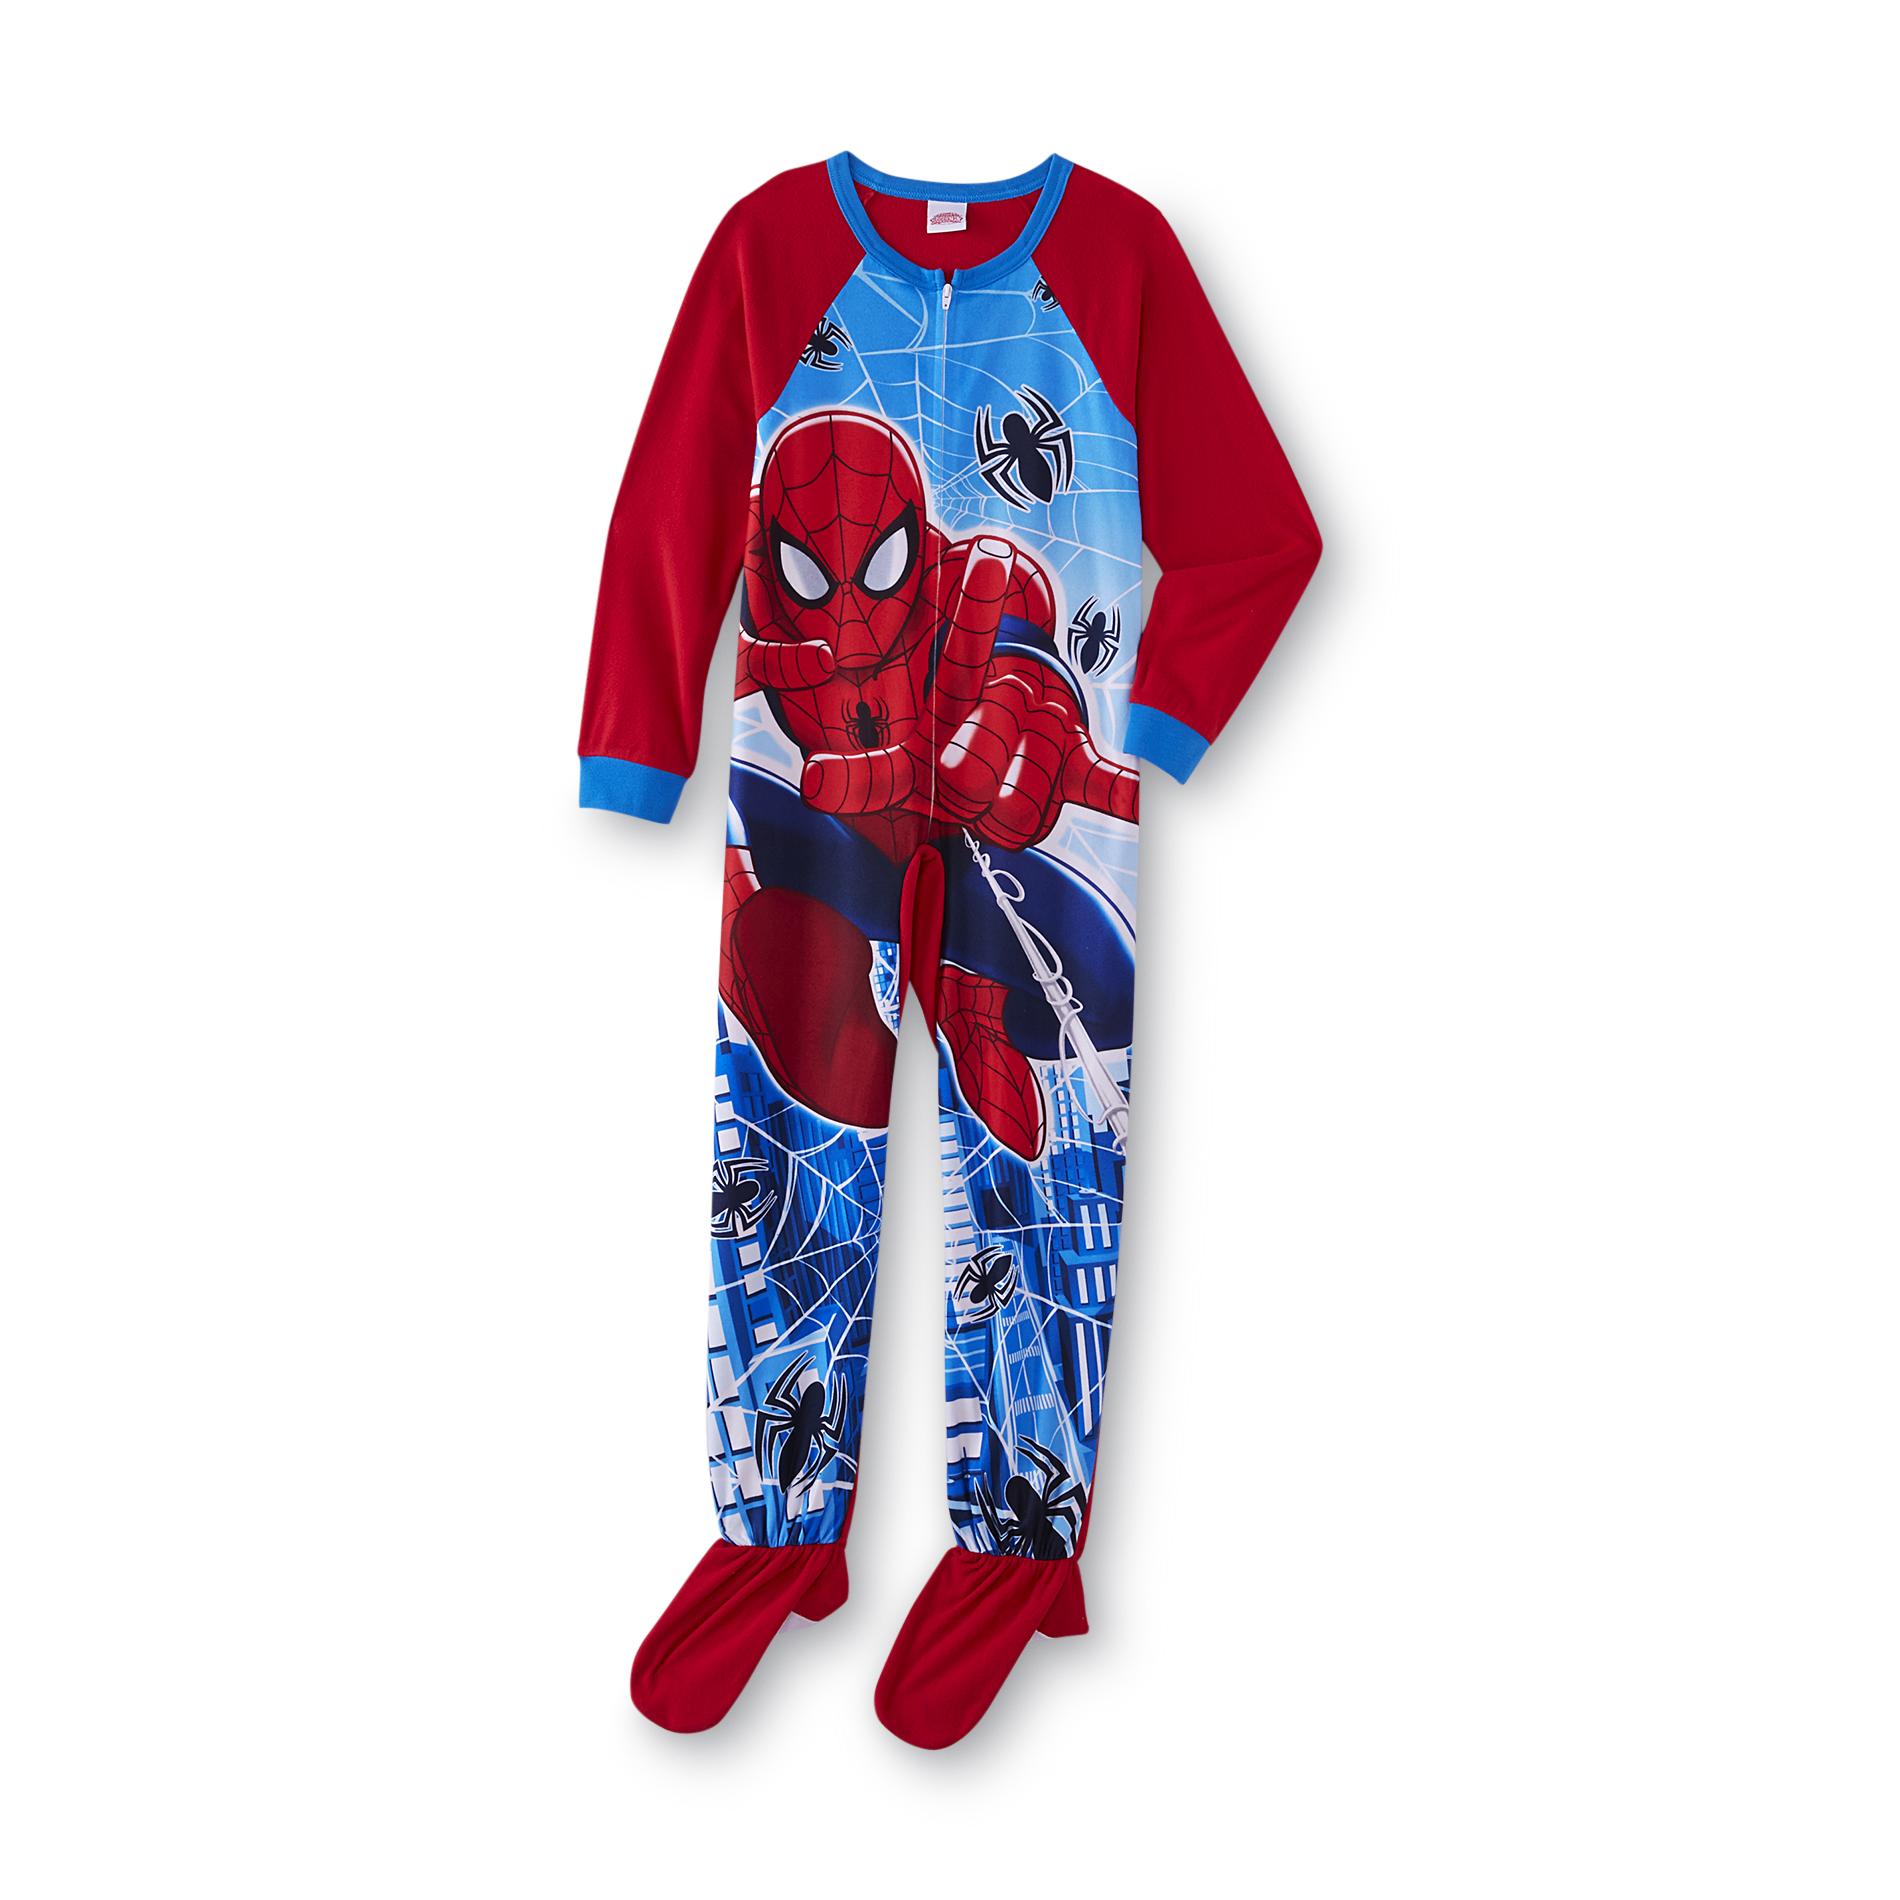 Marvel Ultimate SpiderMan Boy's Footed Sleeper Pajamas